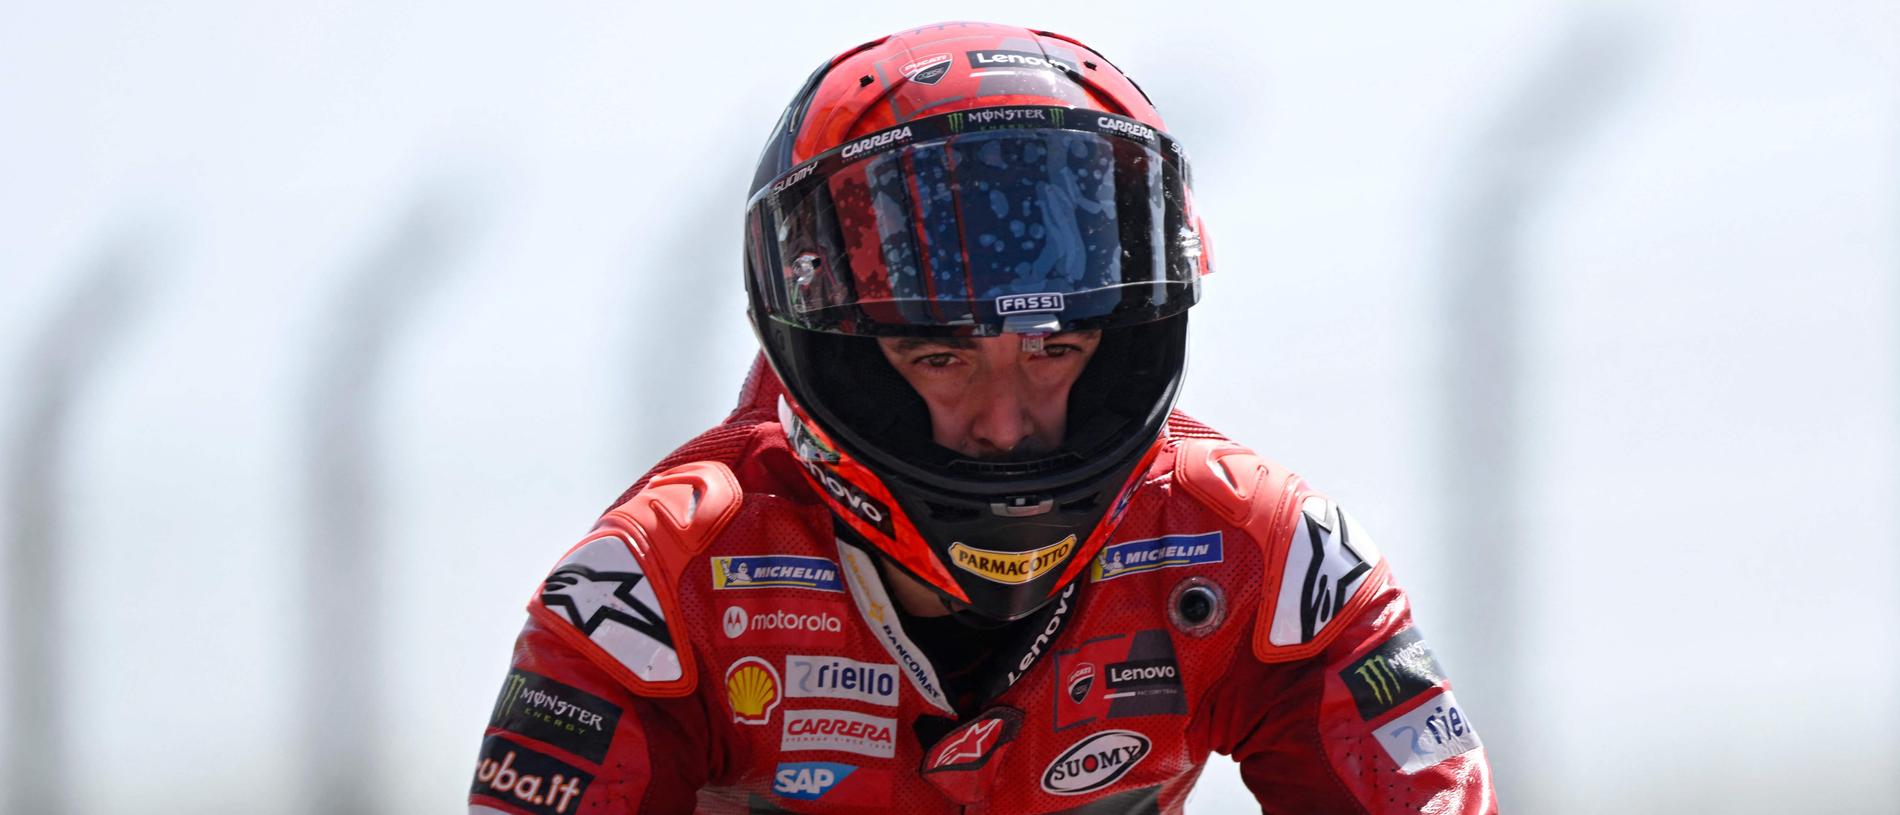 MotoGP Title Contenders: Racing for Glory